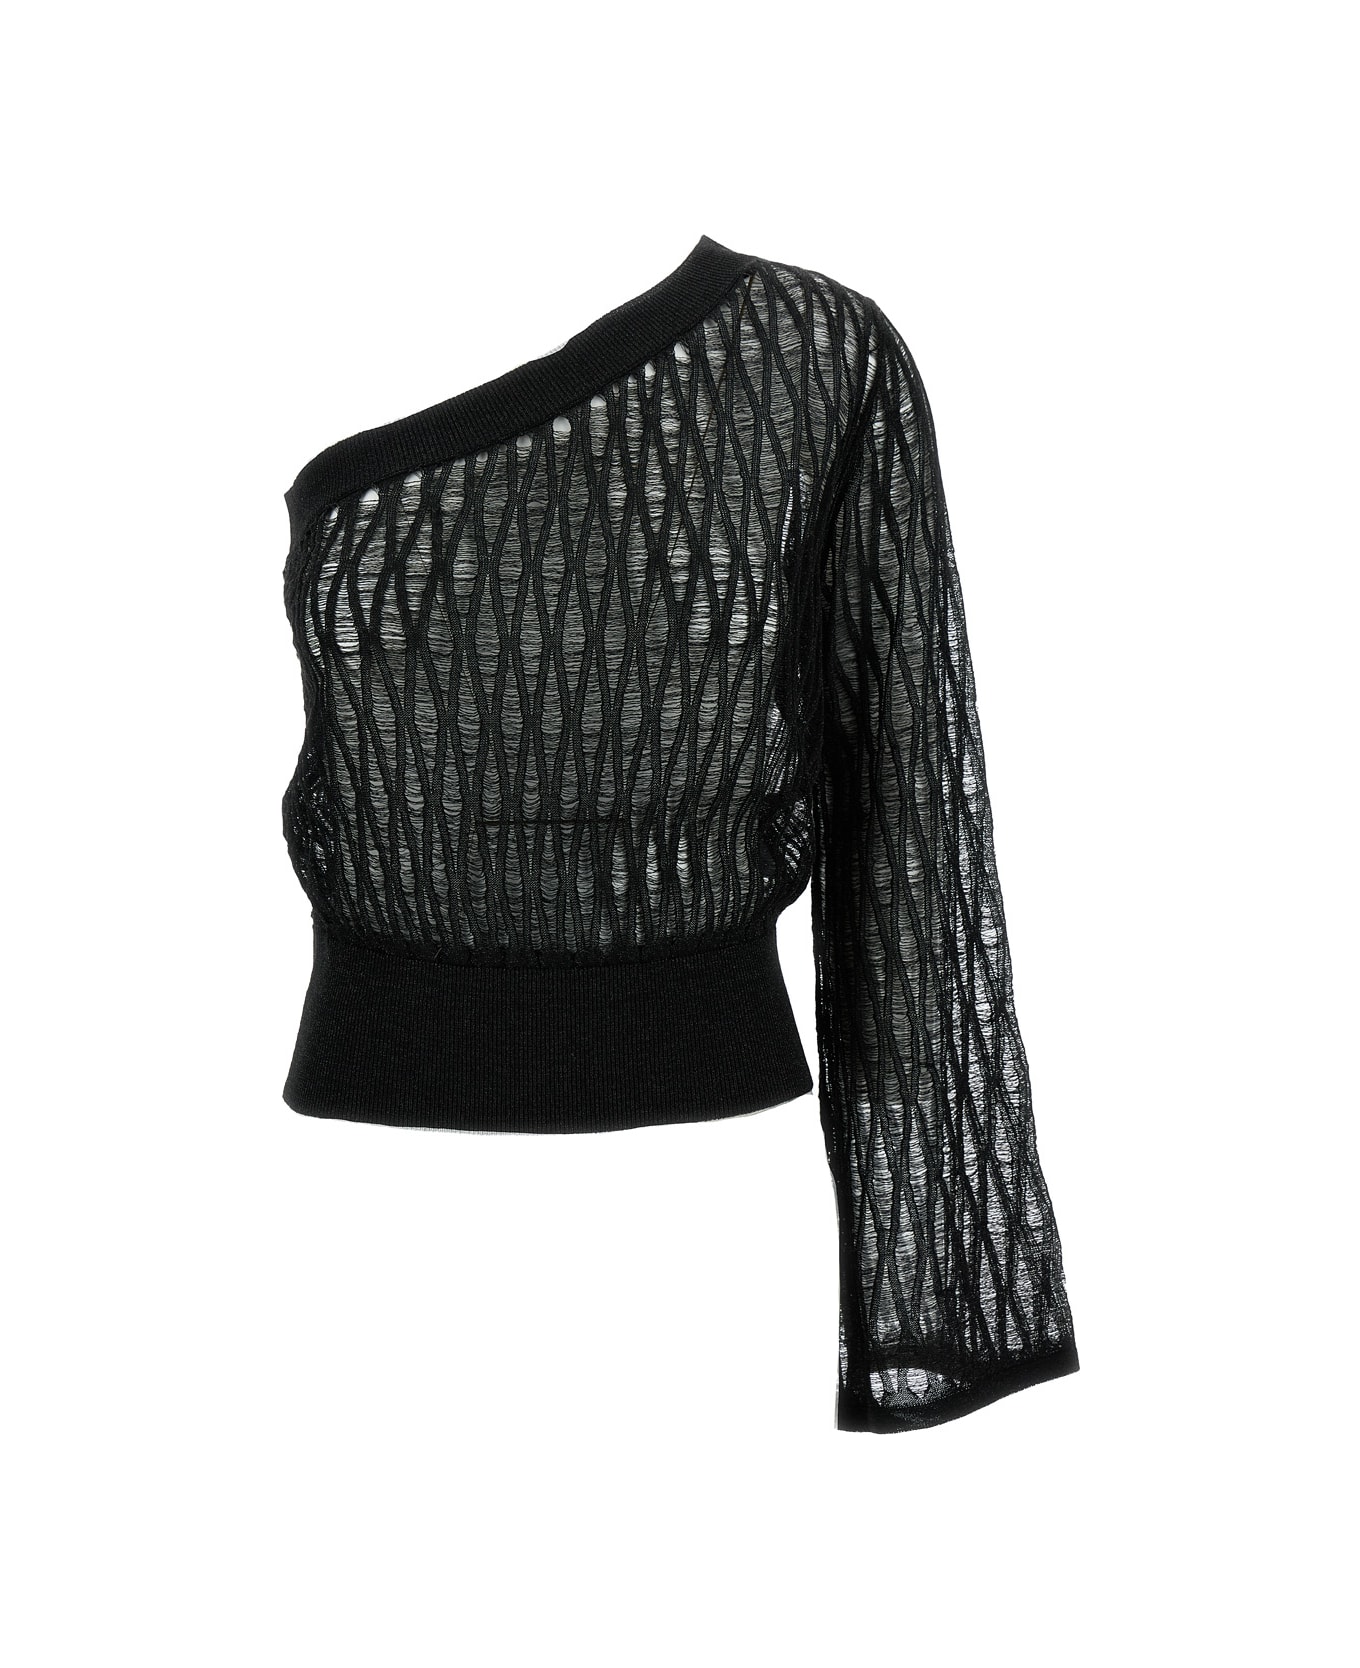 Federica Tosi Black One-shoulder Knit Top In Viscose Blend Woman - Black